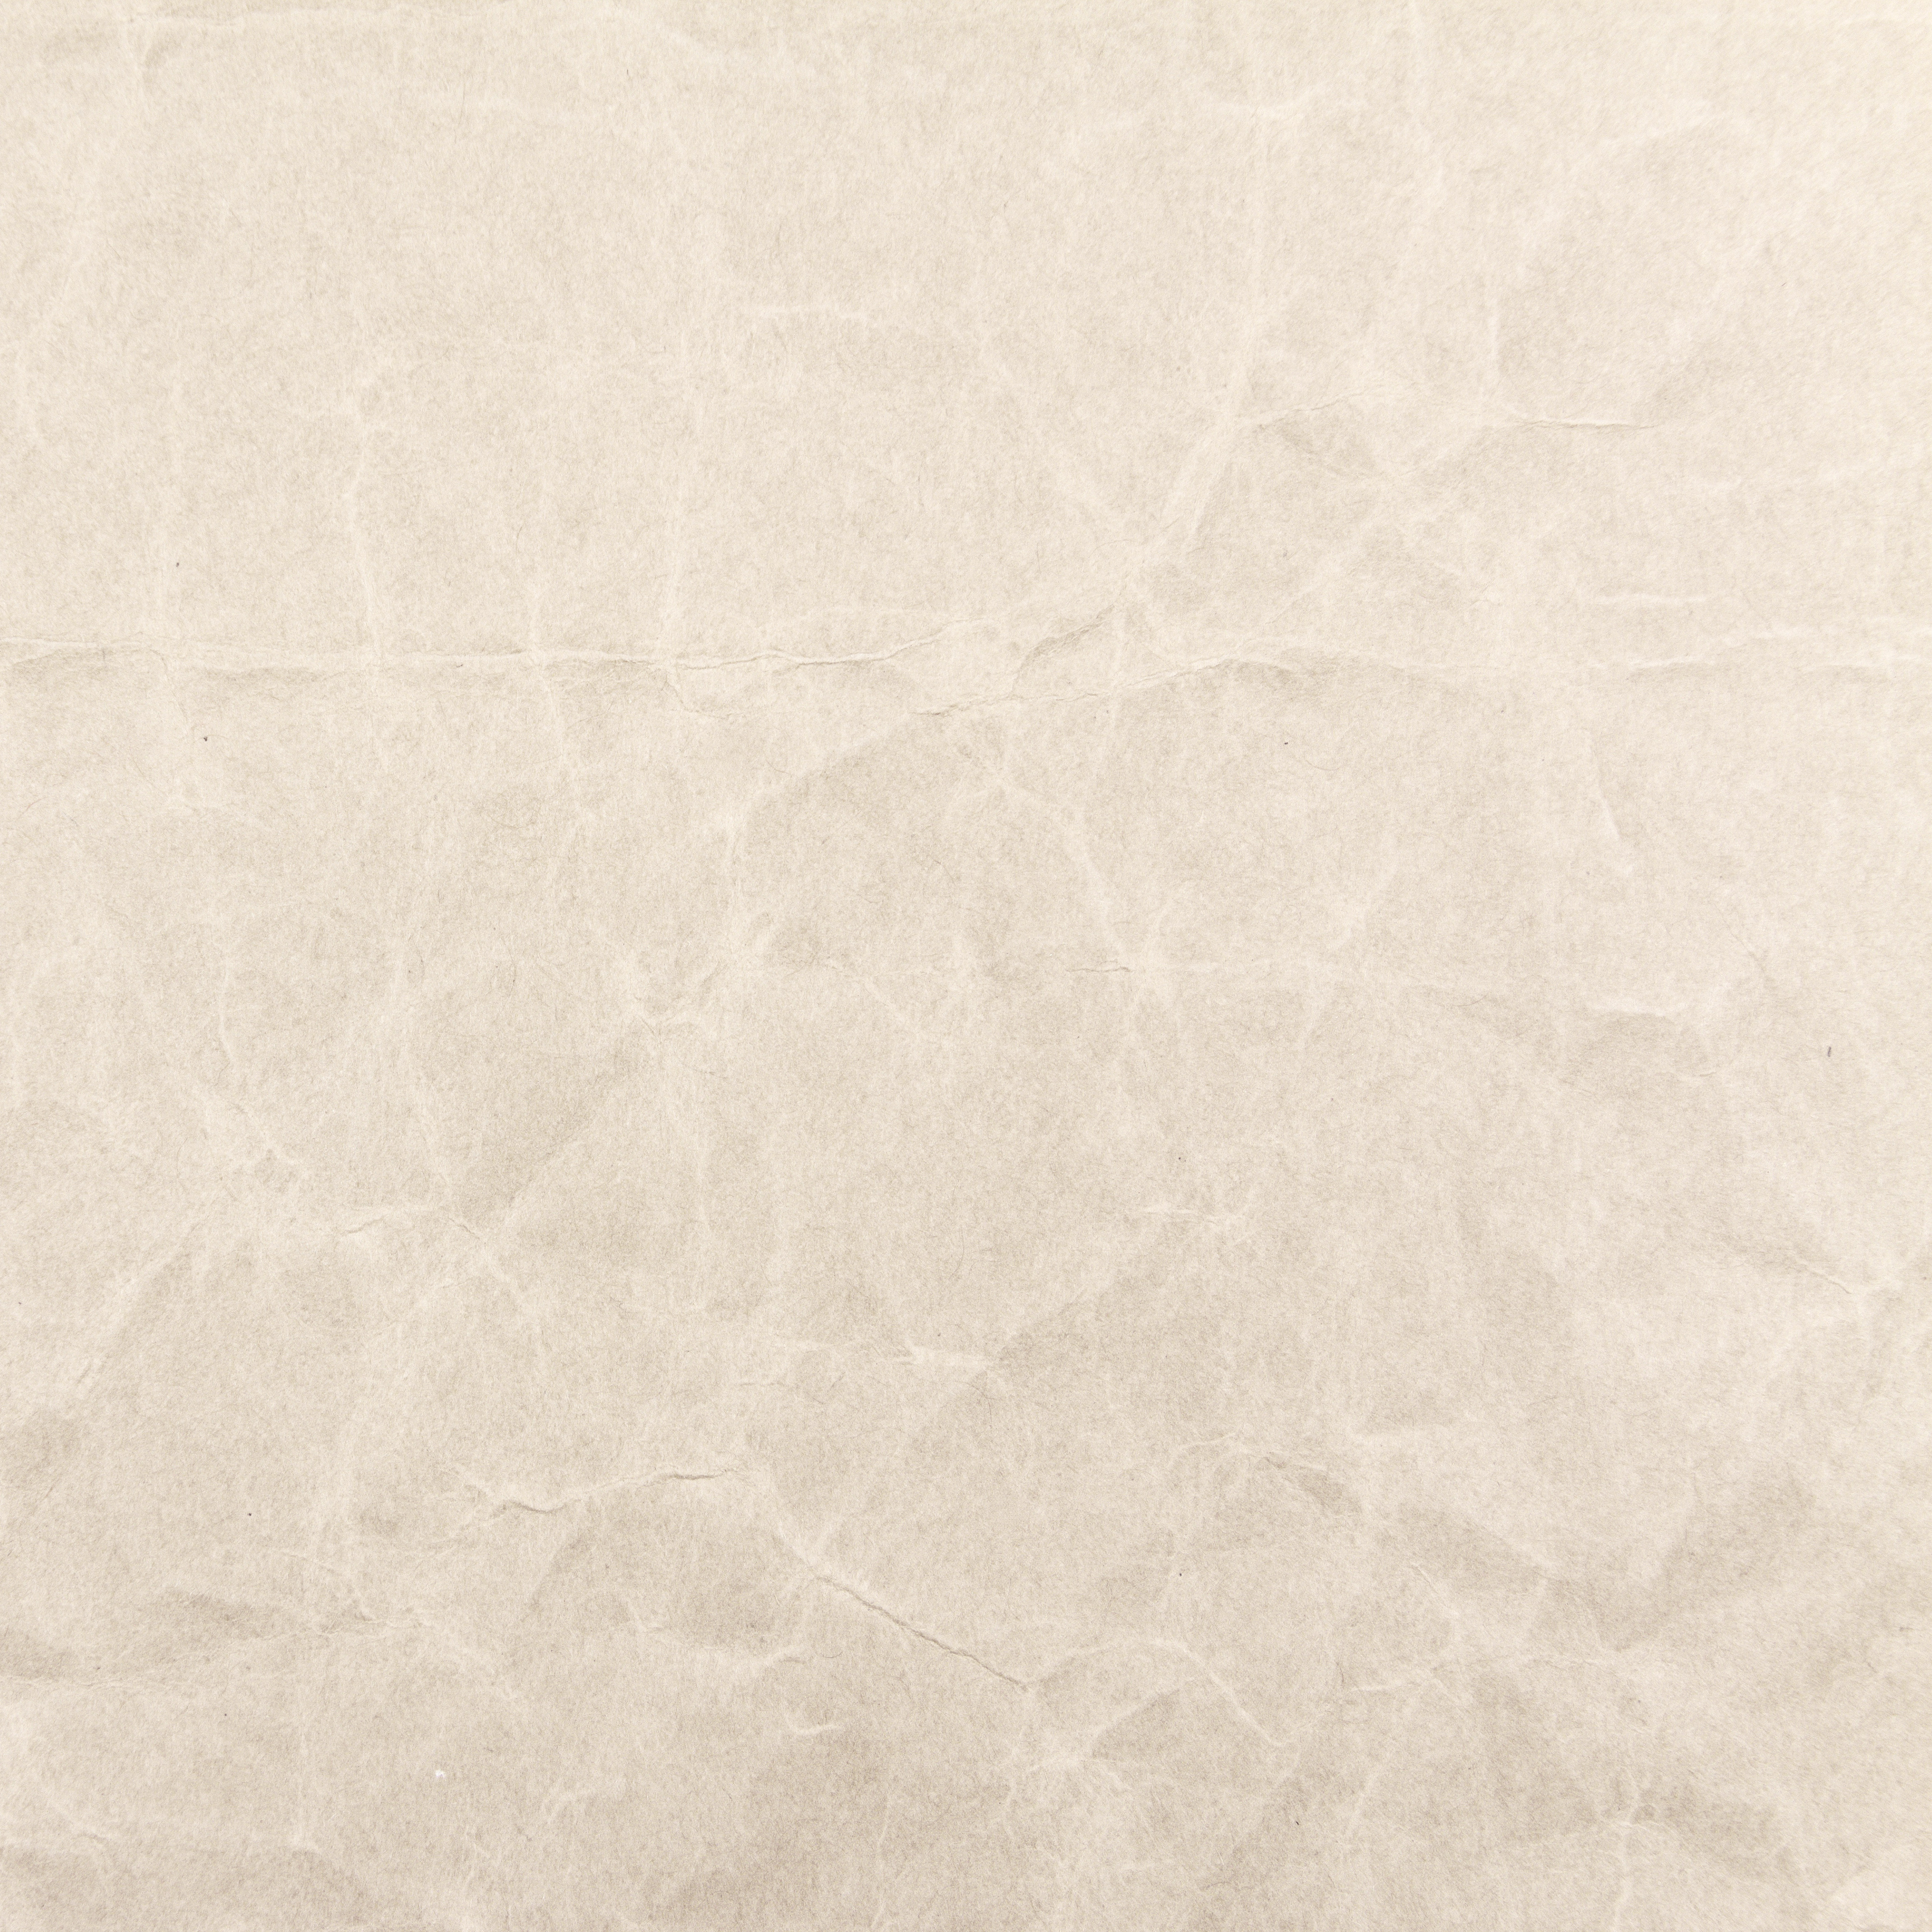 Light paper texture photo